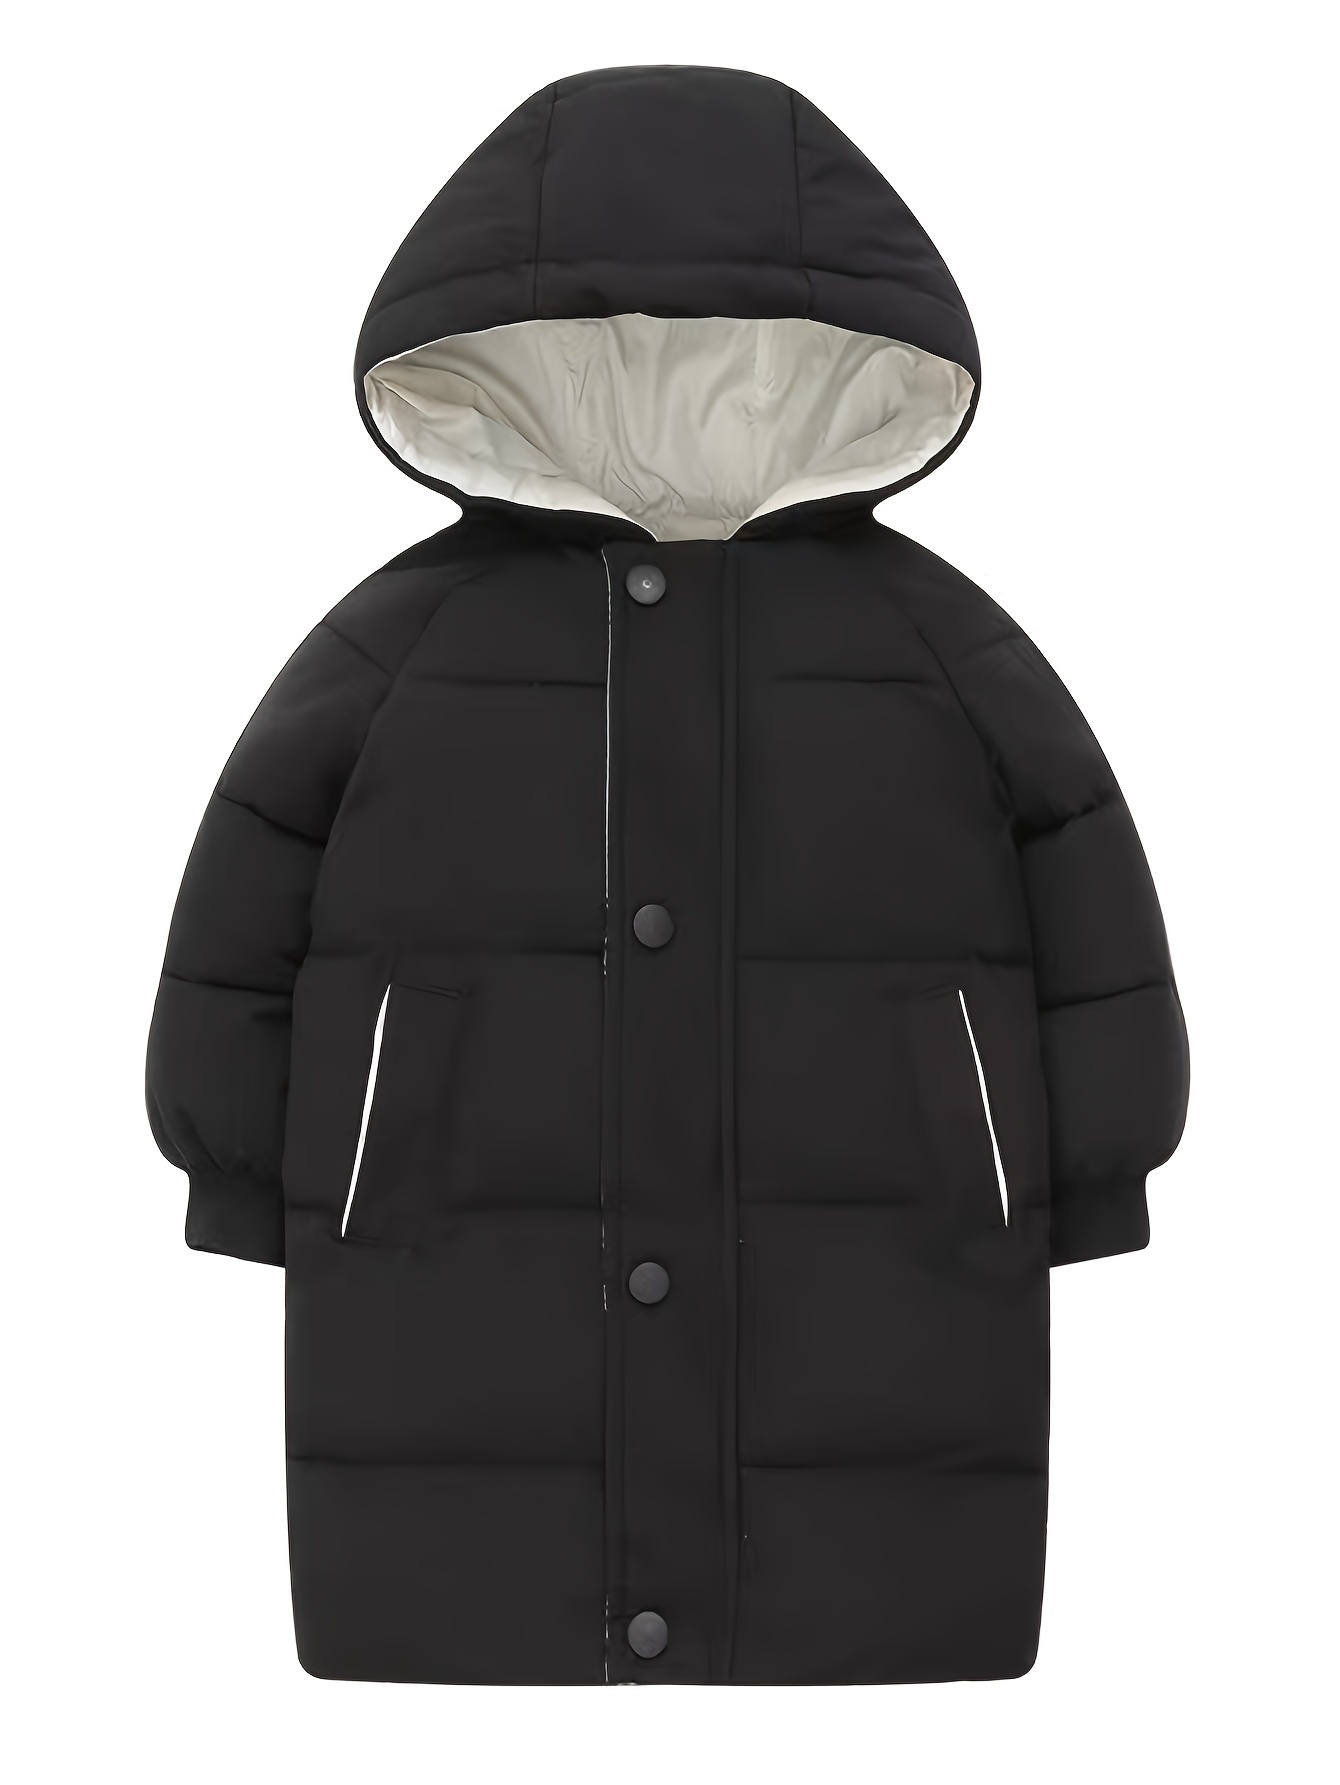  Abrigos de invierno para mujer, de forro polar cálido, a prueba  de viento, abrigo de sherpa de felpa compuesta, bolsillos con botones,  abrigo de abrigo de abrigo : Ropa, Zapatos y